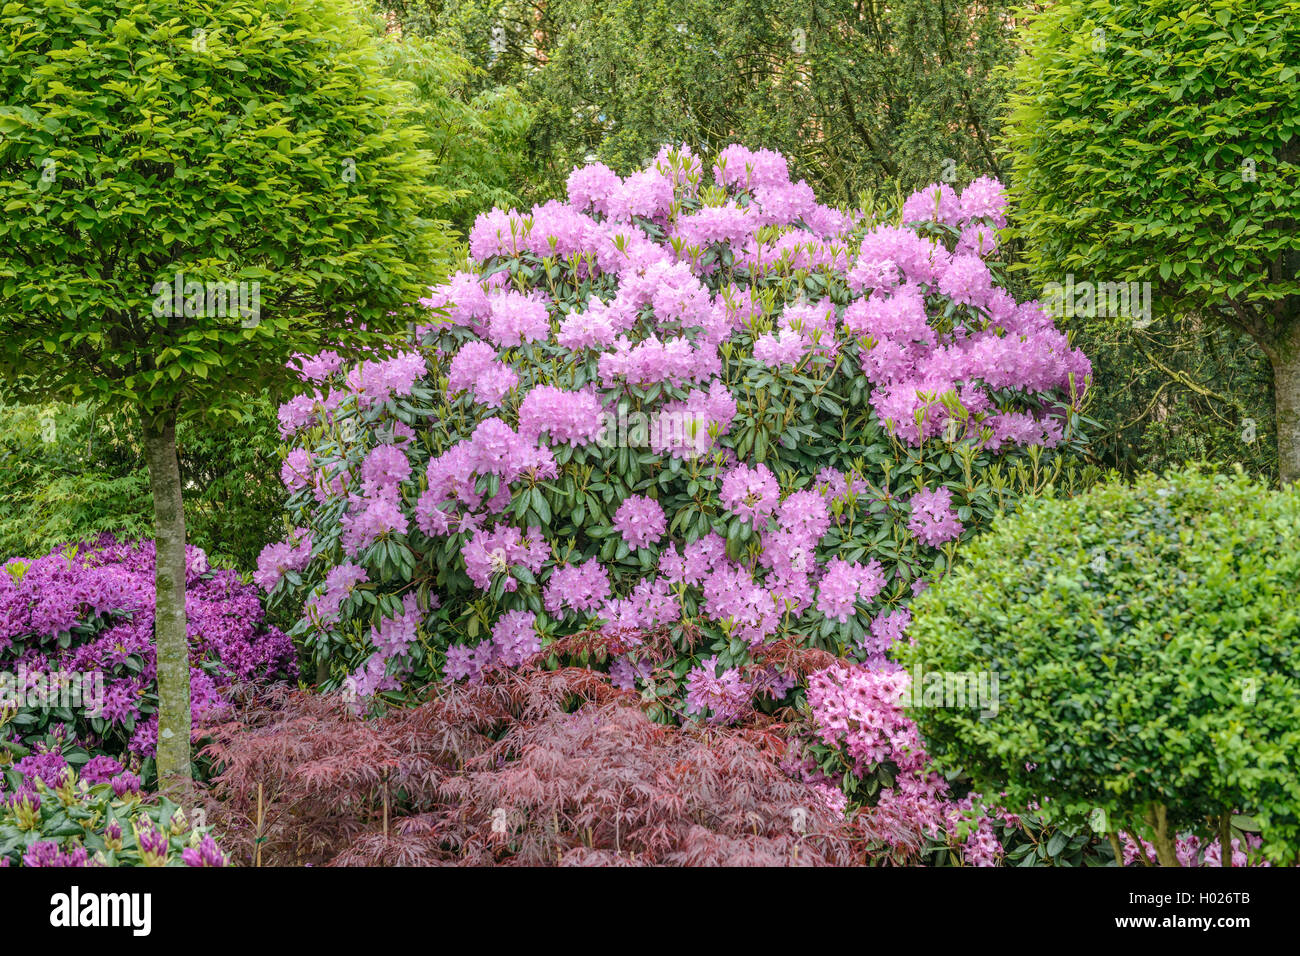 Catawba rhododendron, Catawba rose bay (Rhododendron catawbiense 'Roseum Elegans', Rhododendron catawbiense Roseum Elegans), cultivar Roseum Elegans Stock Photo